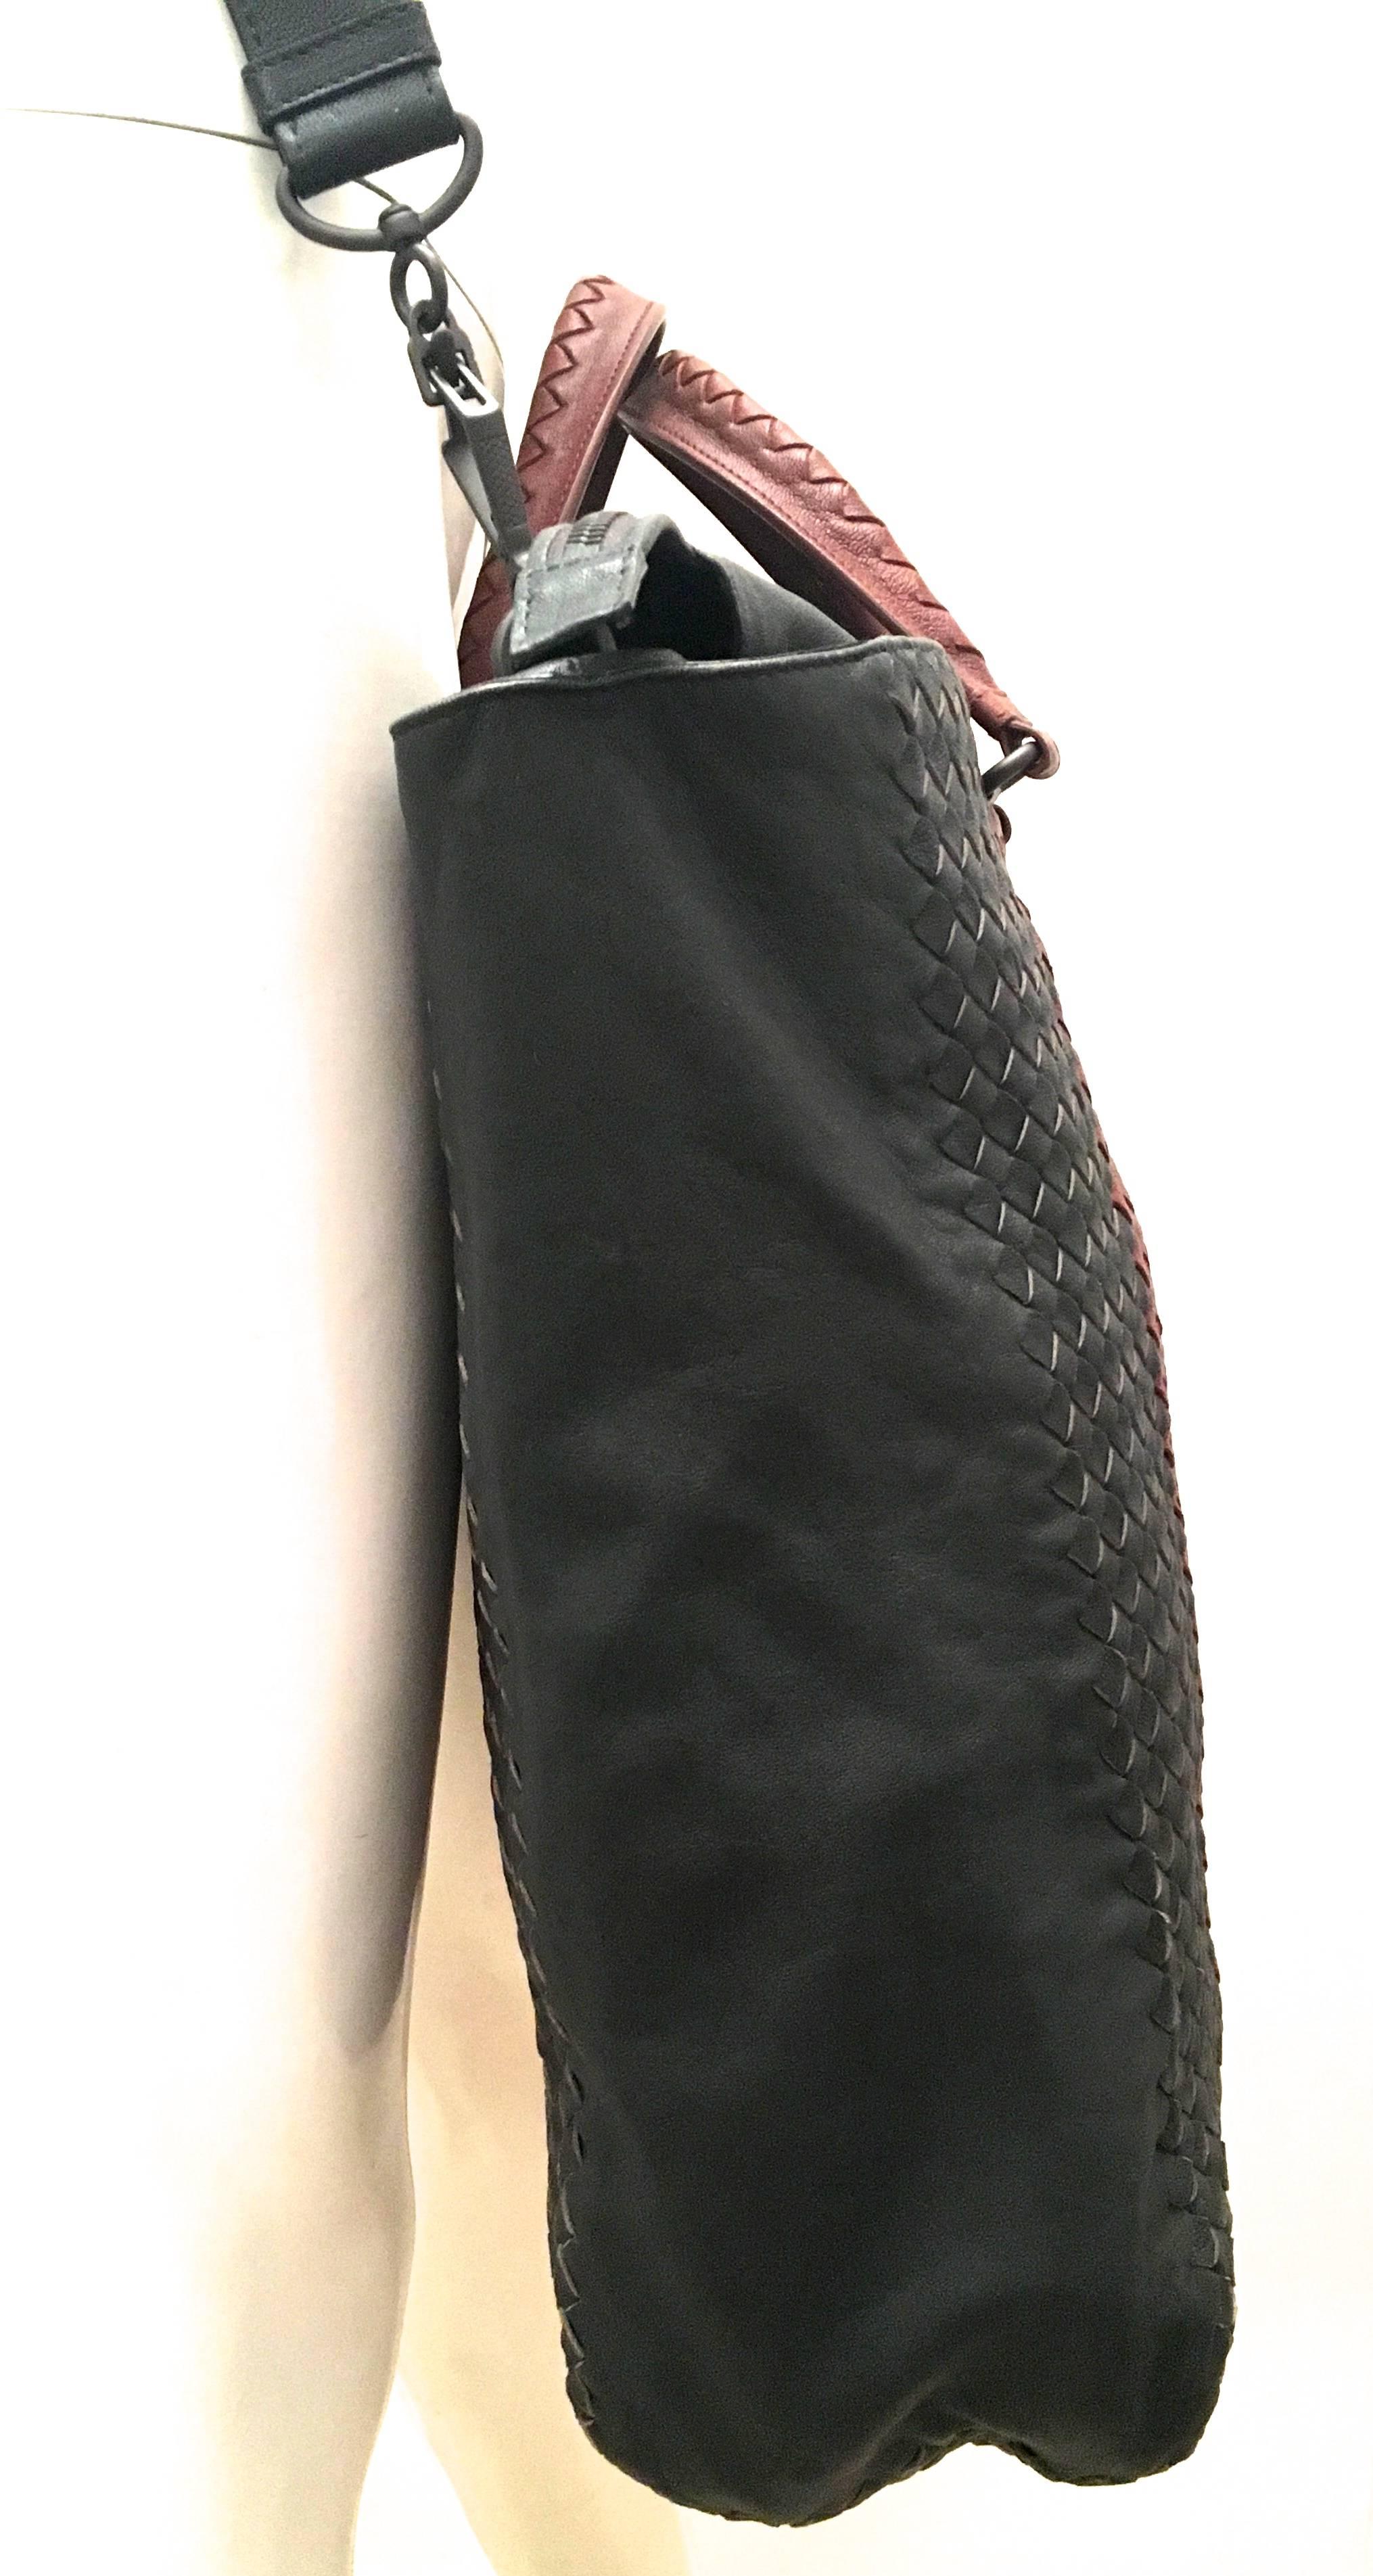 Black Bottega Veneta  Purse / Tote / Messenger Bag/Limited Edition For Sale